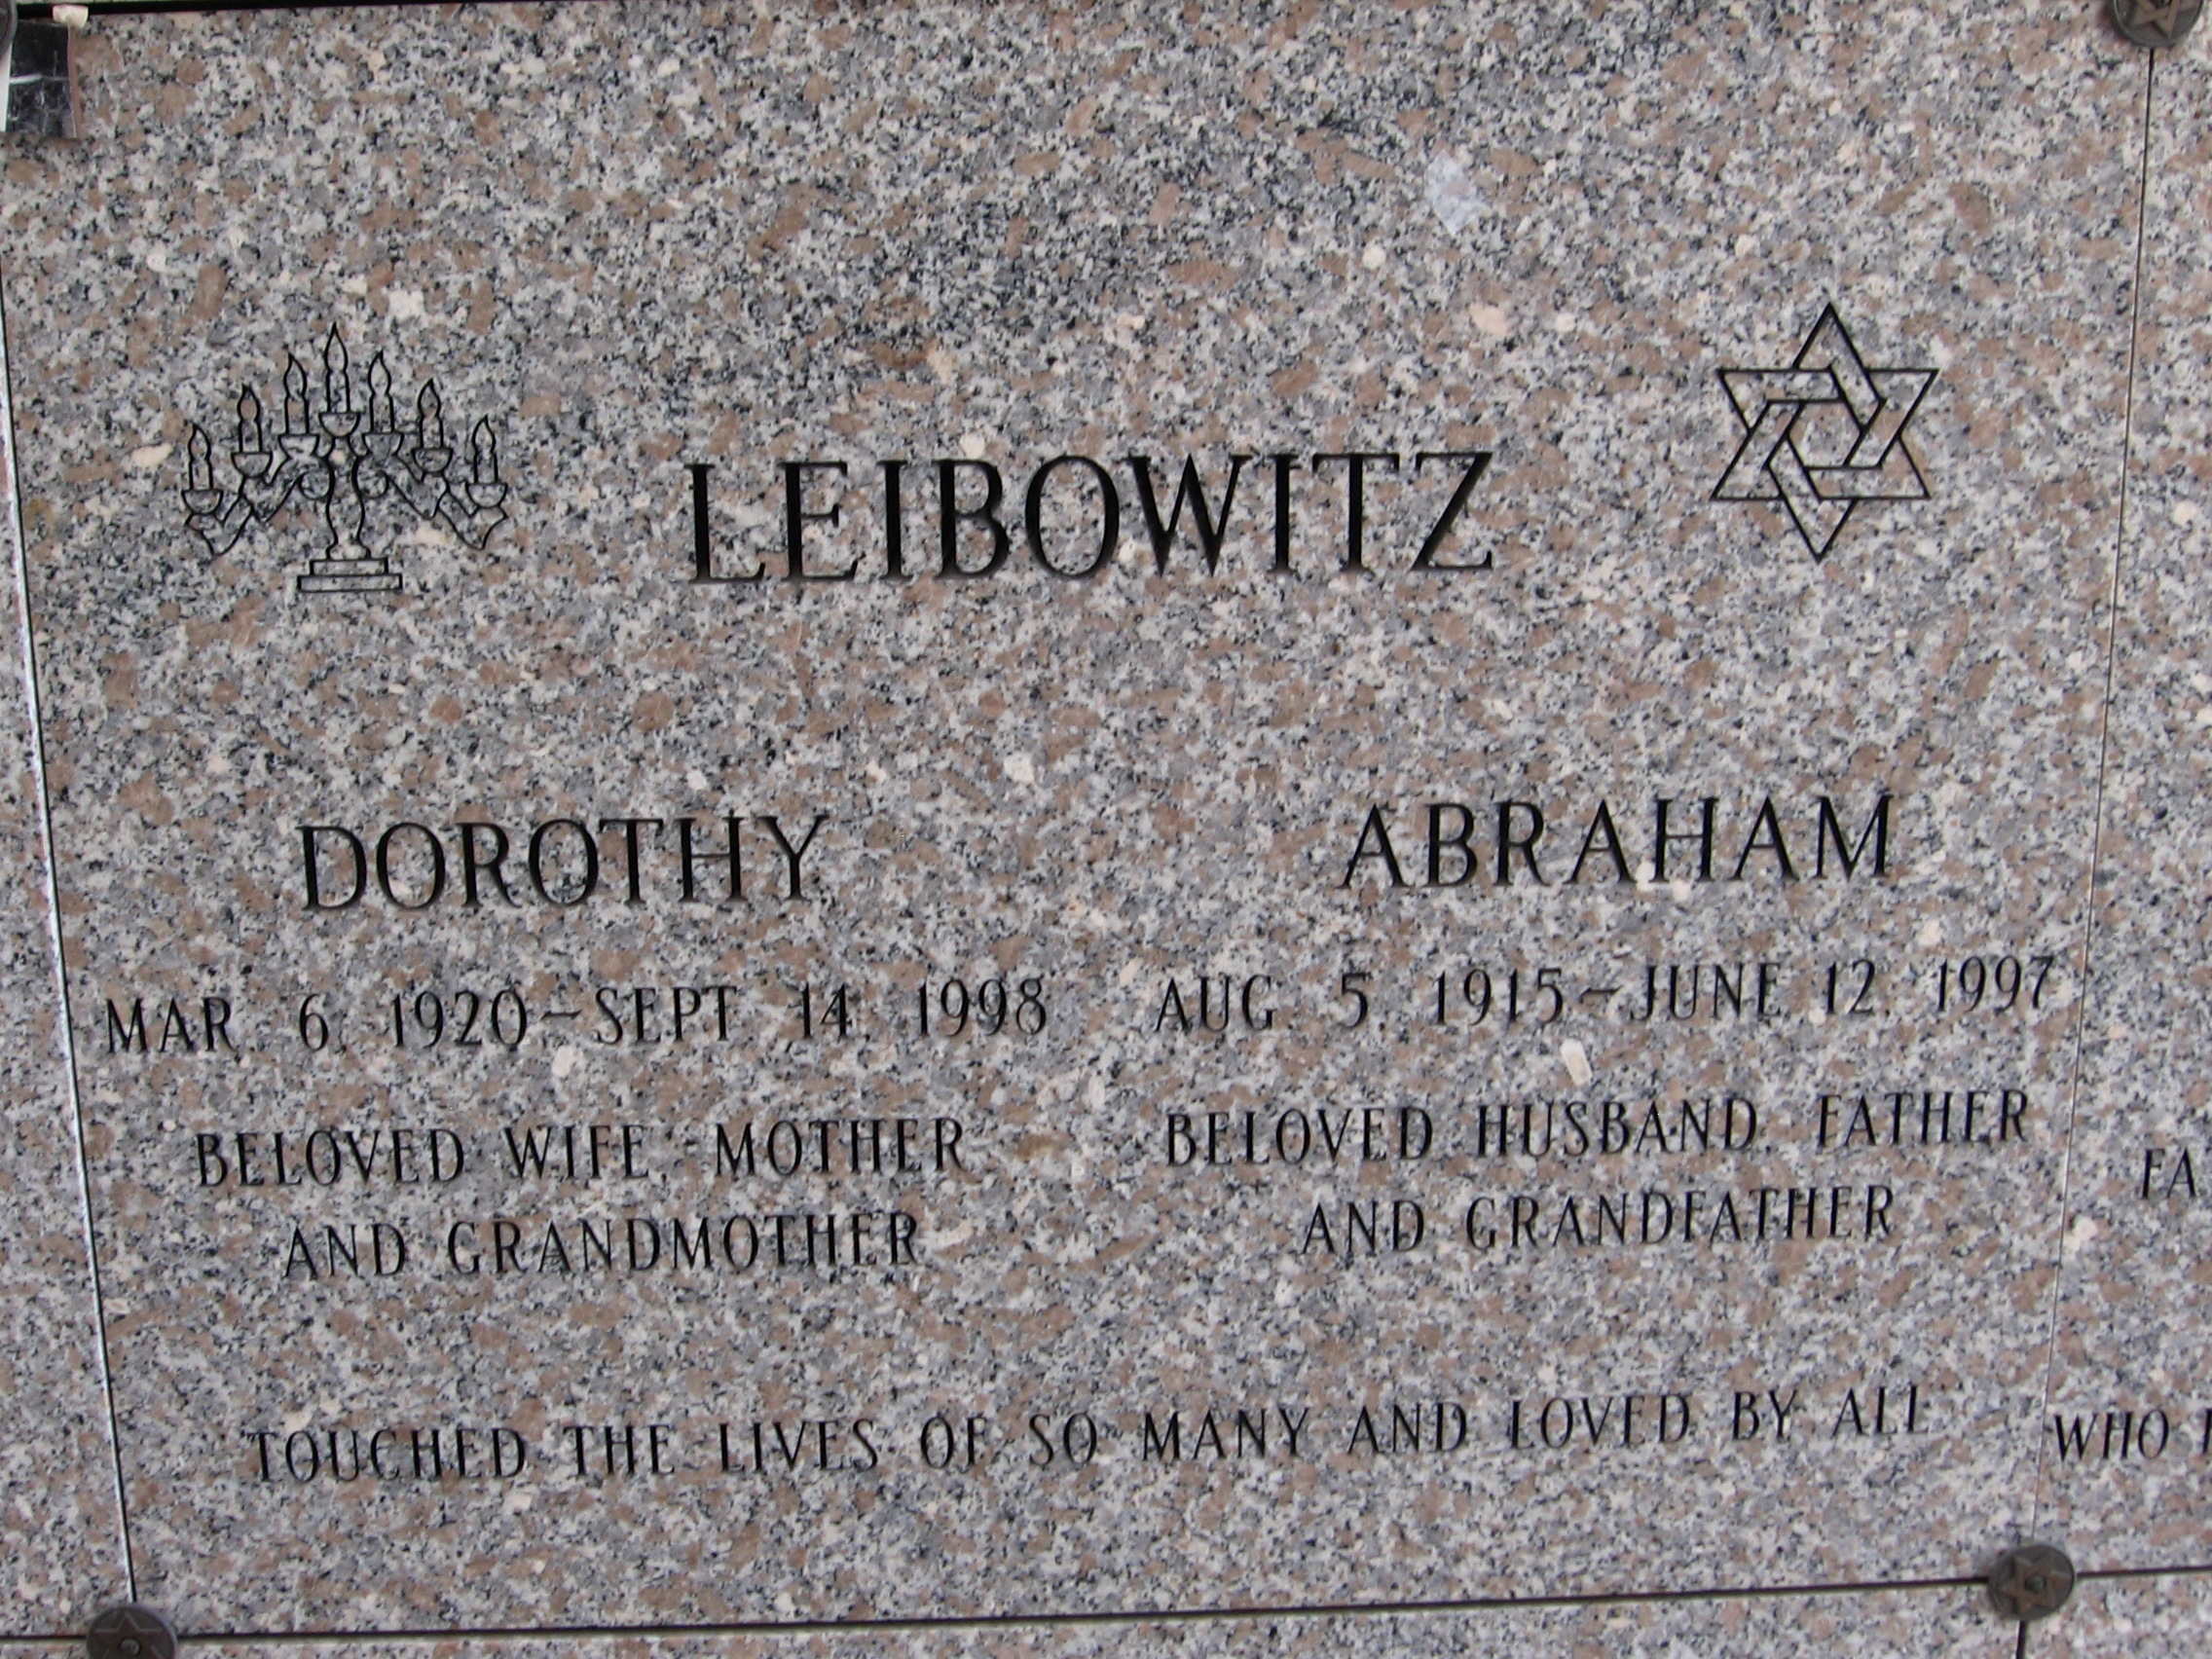 Abraham Leibowitz